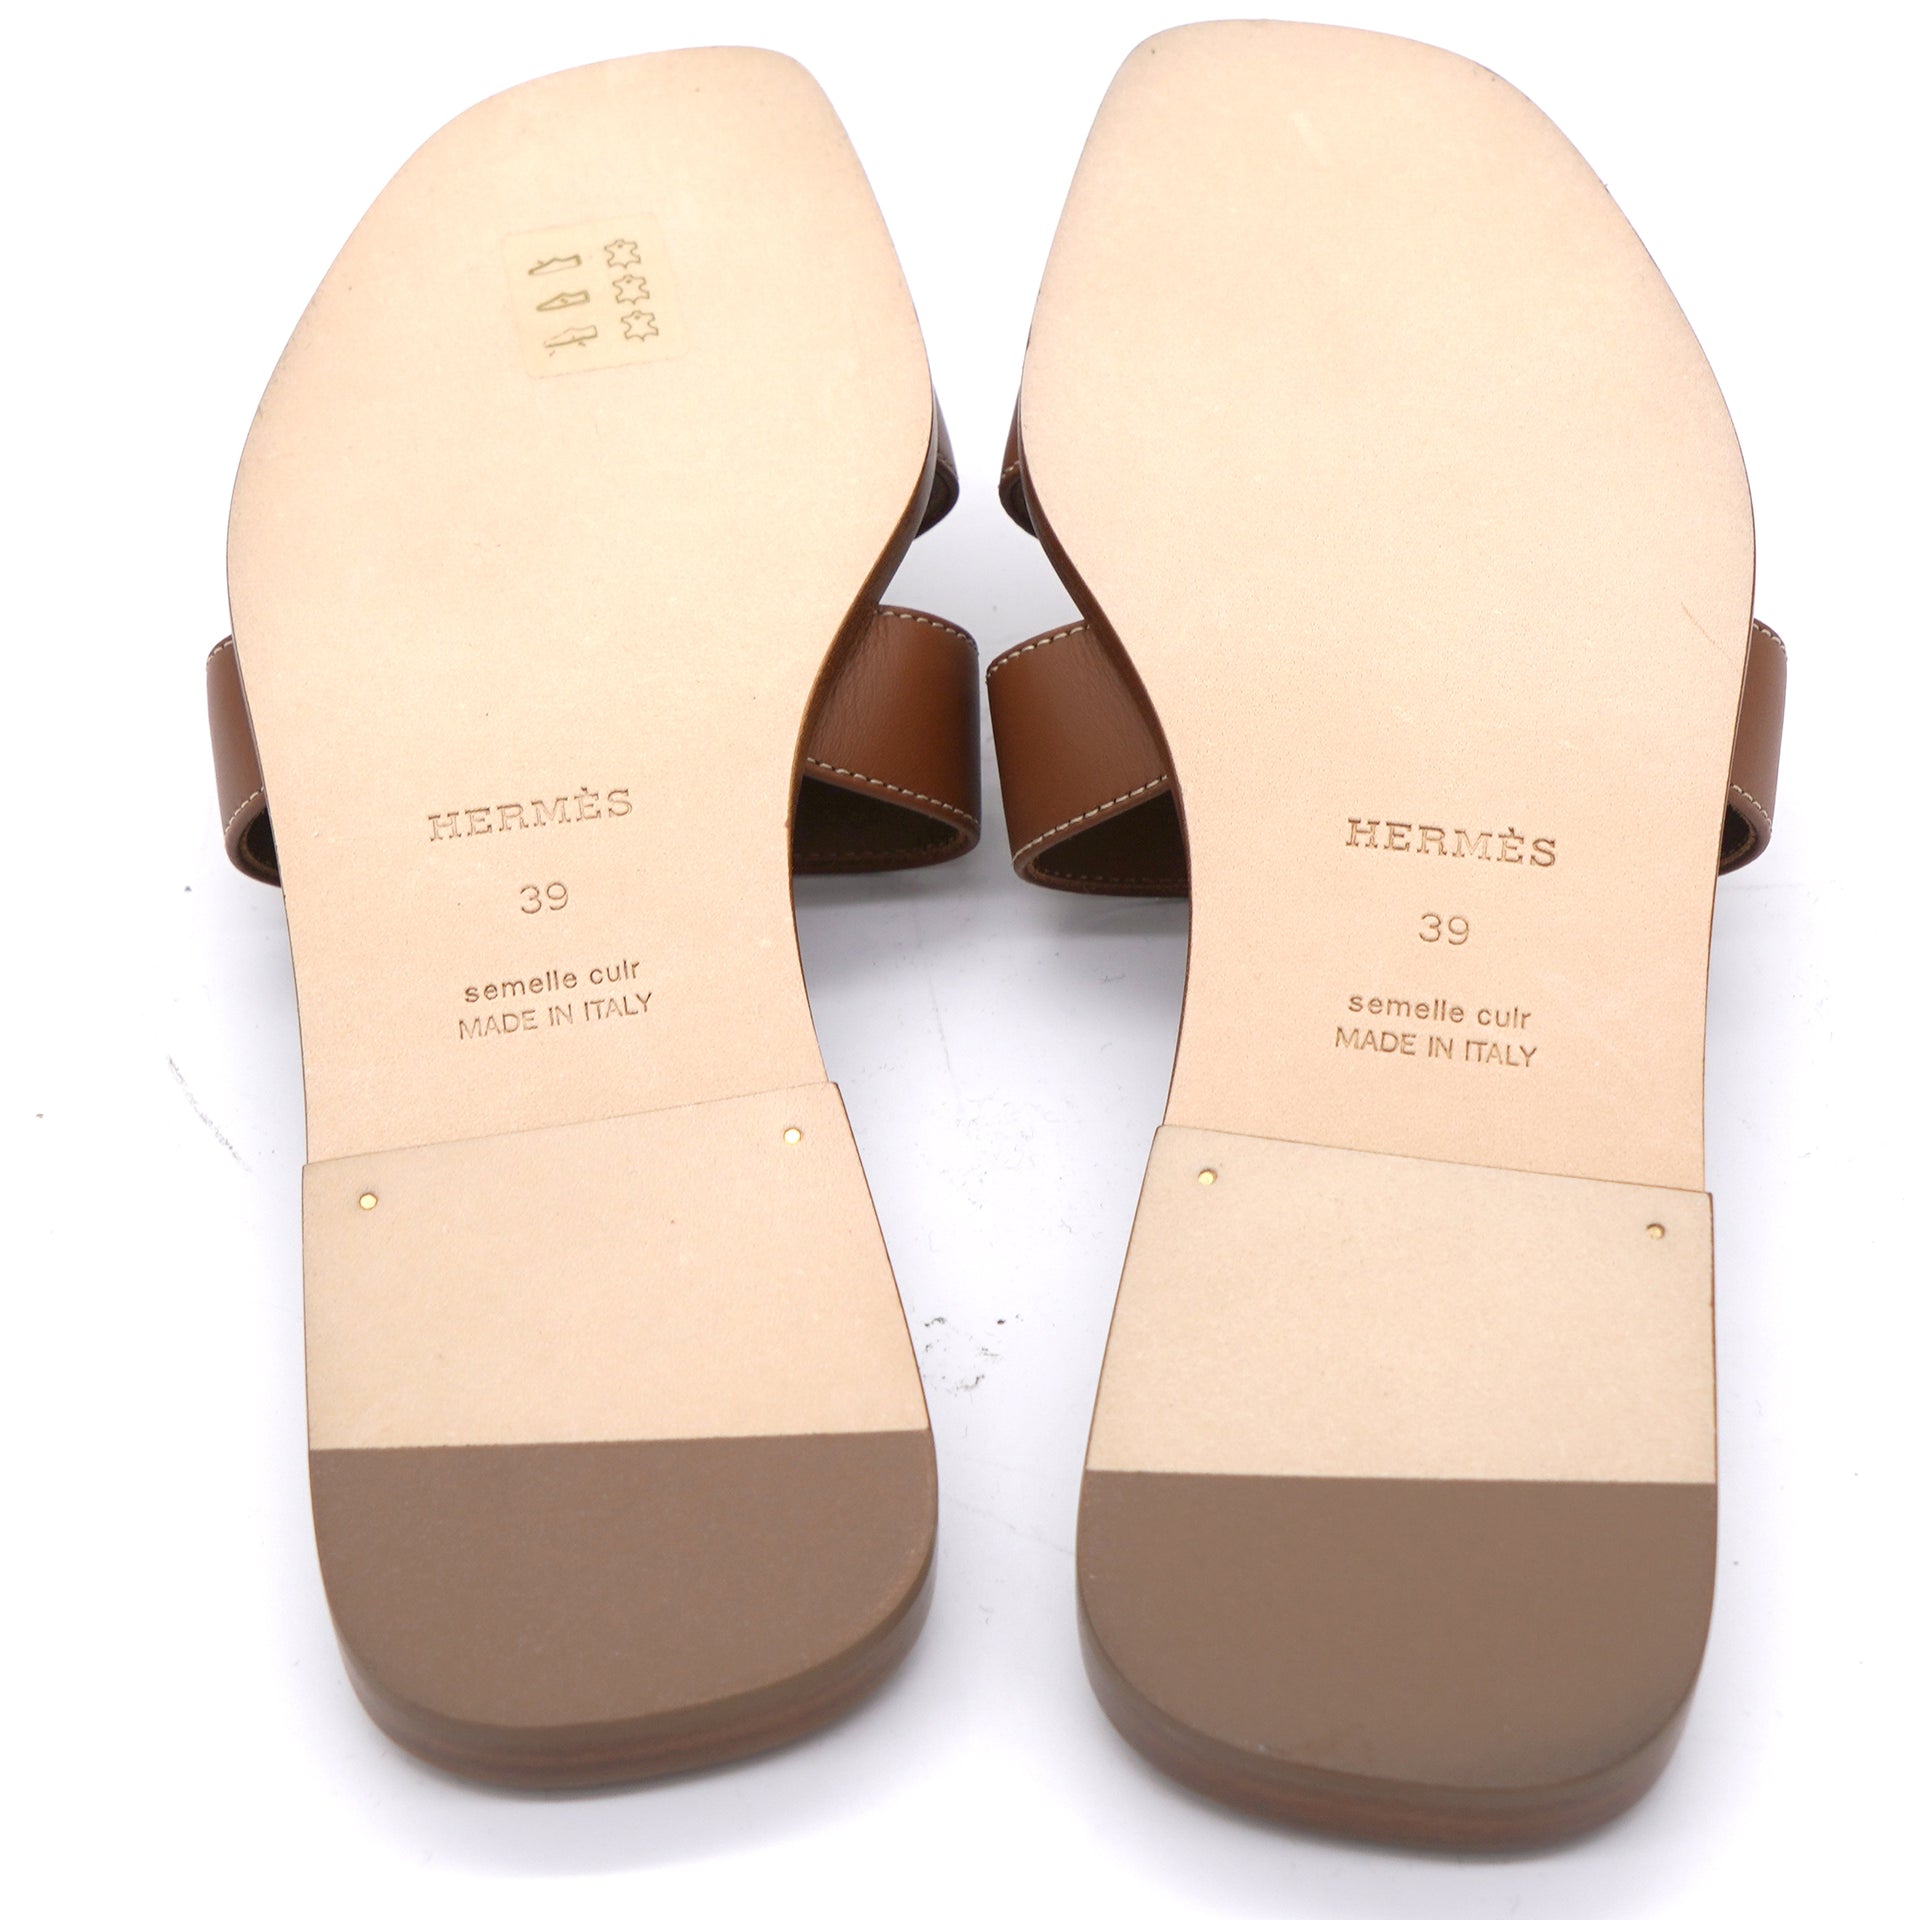 Tan Leather Oran Flat Sandals 39